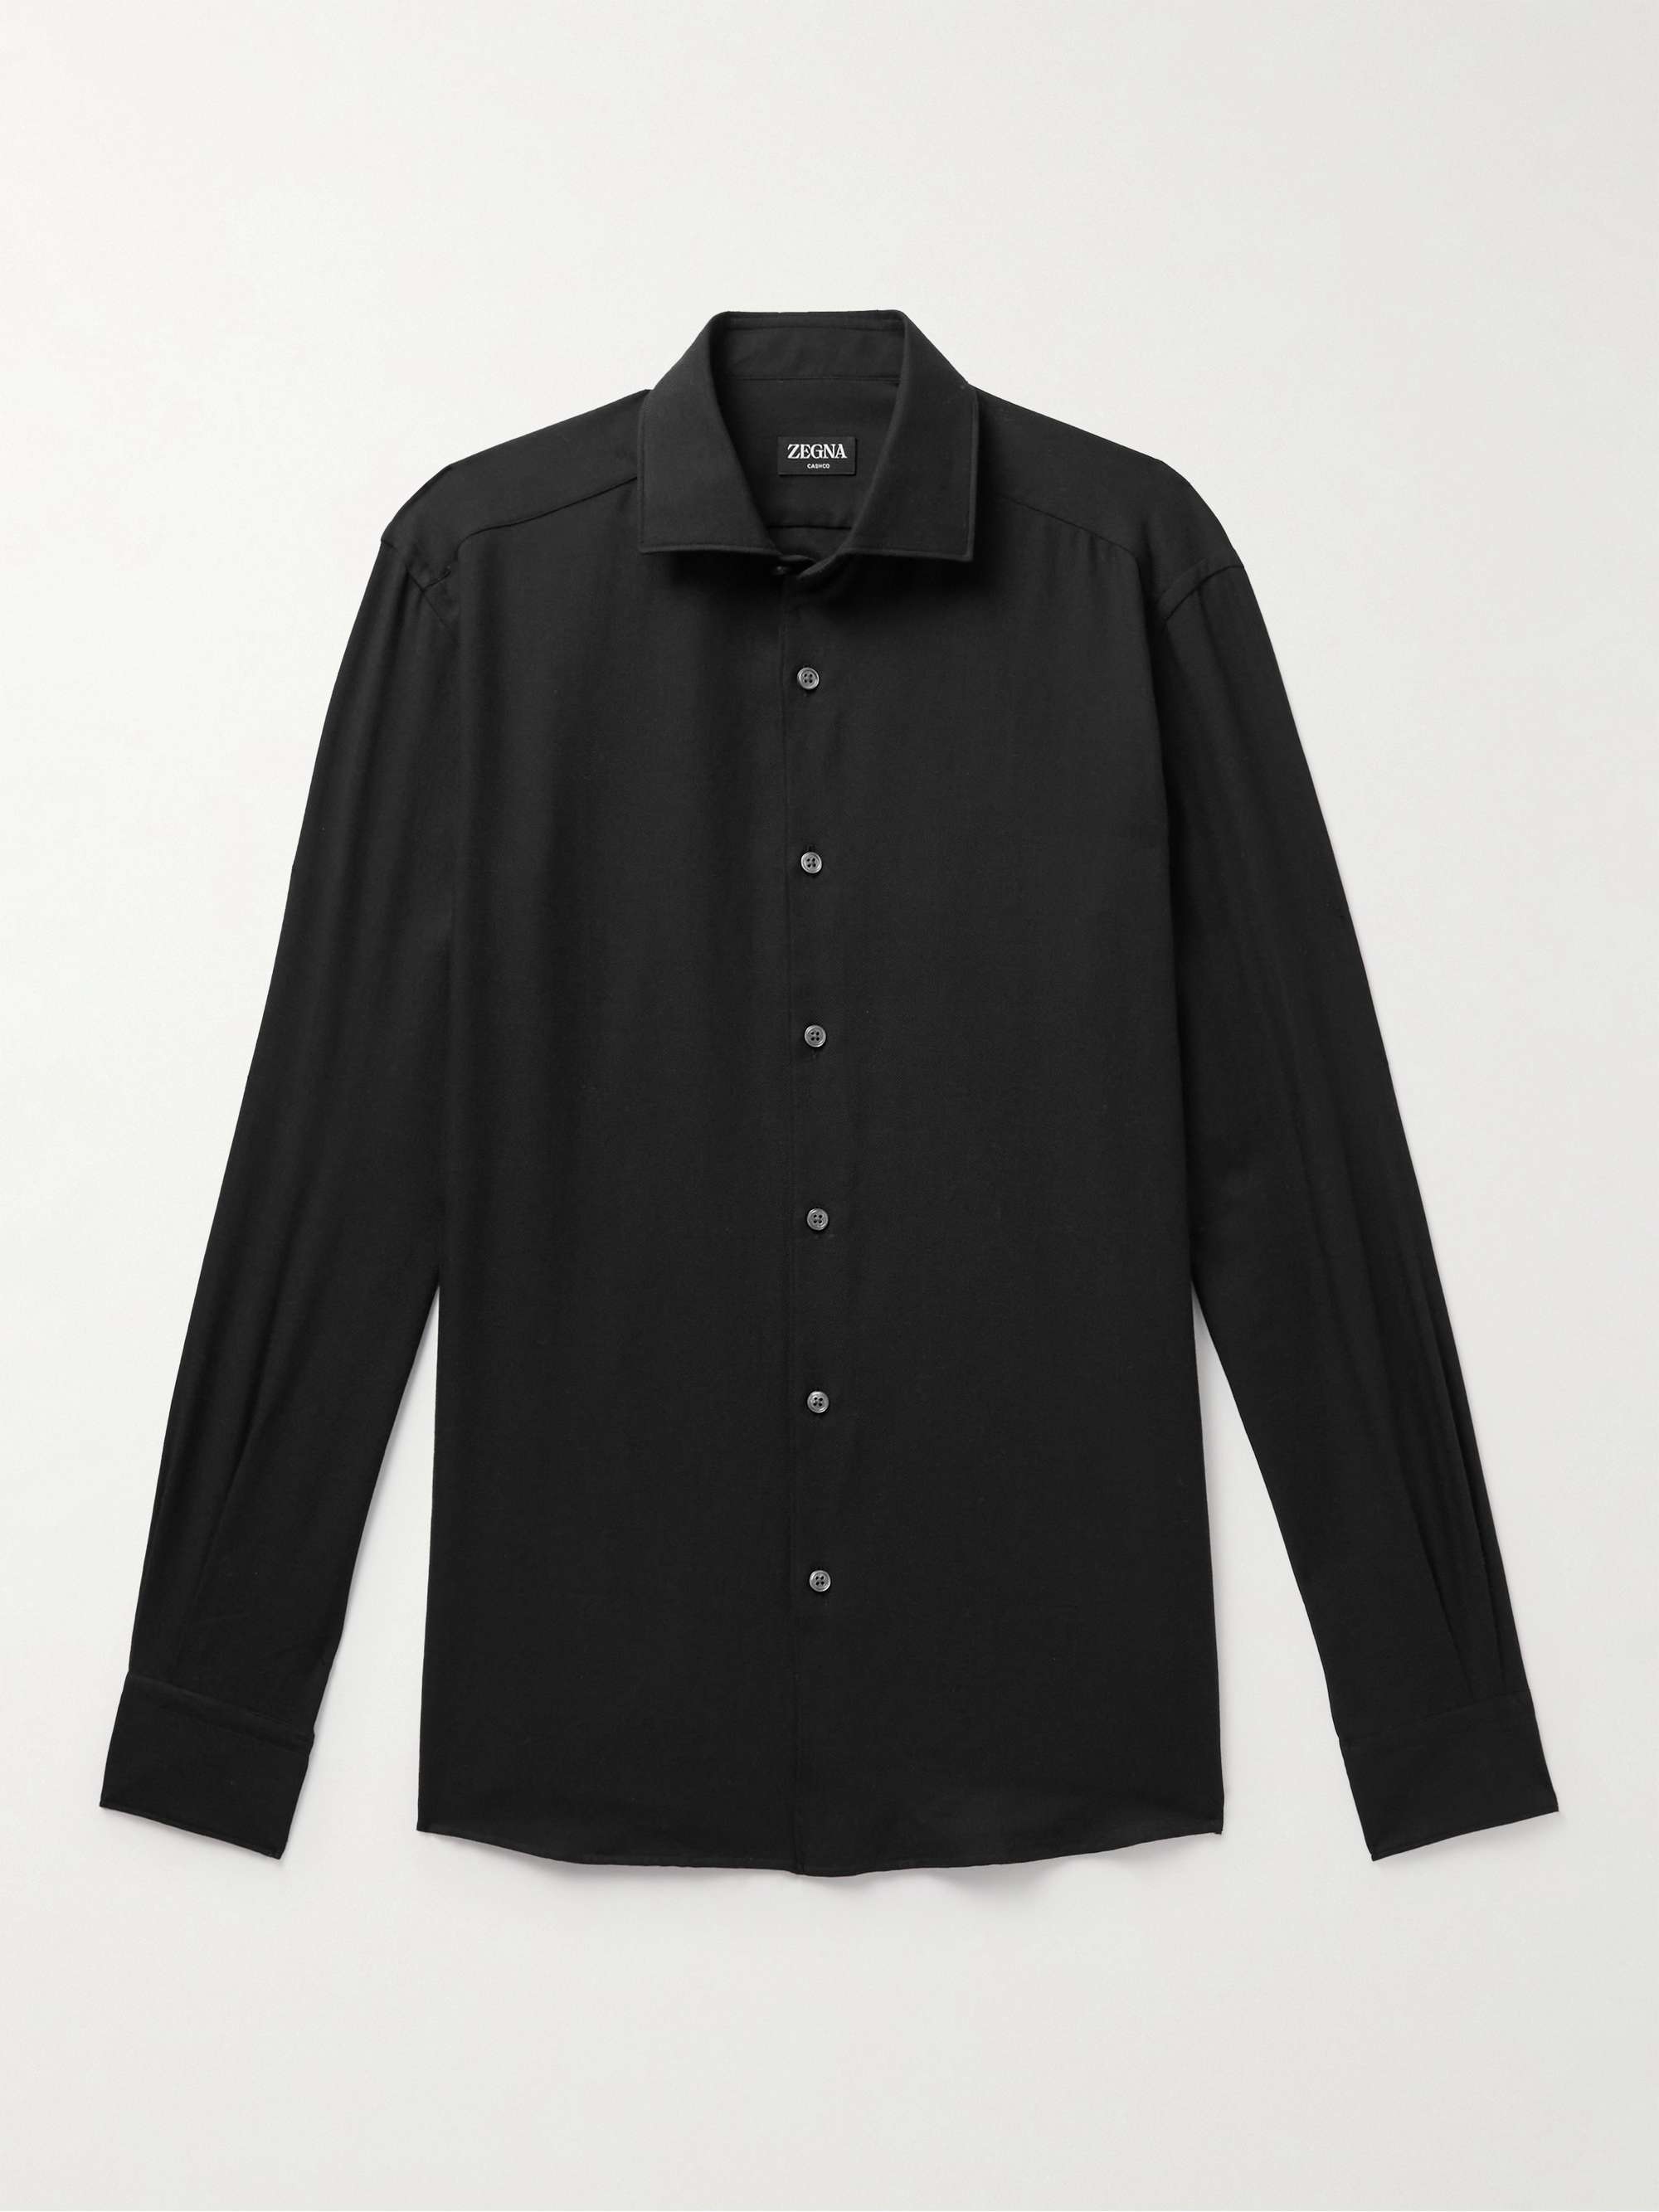 ZEGNA Cotton and Cashmere-Blend Twill Shirt